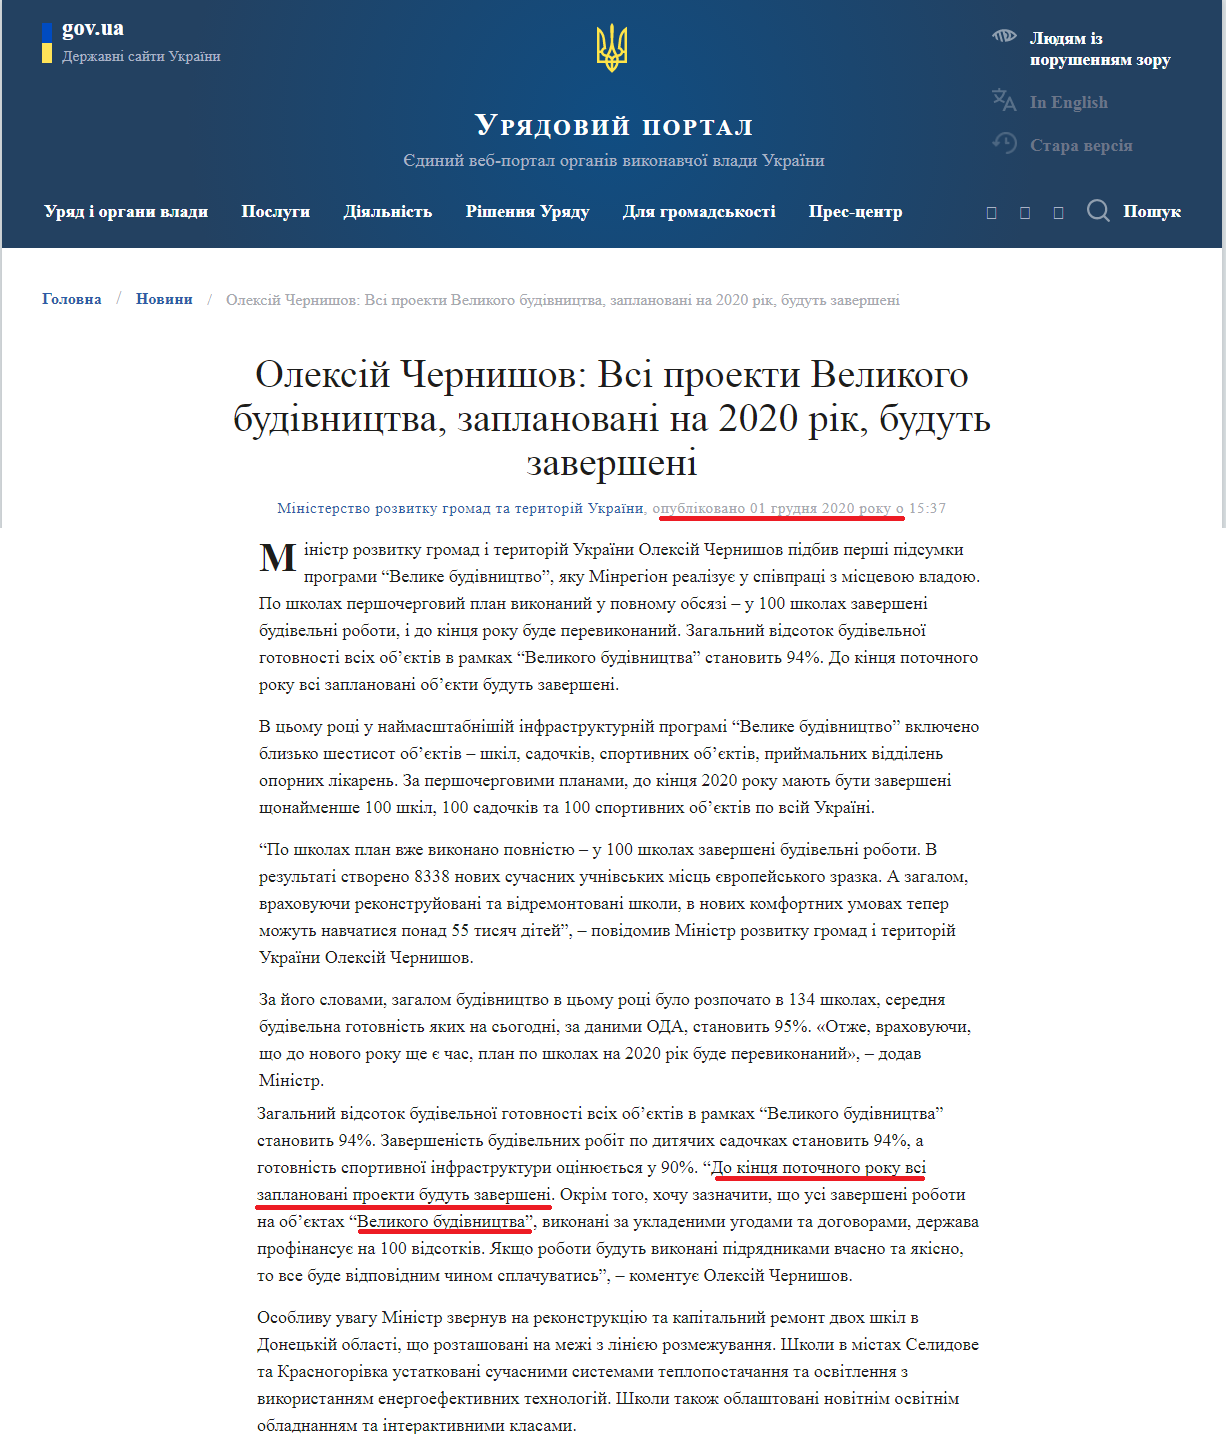 https://www.kmu.gov.ua/news/oleksij-chernishov-vsi-proekti-velikogo-budivnictva-zaplanovani-na-2020-rik-budut-zaversheni